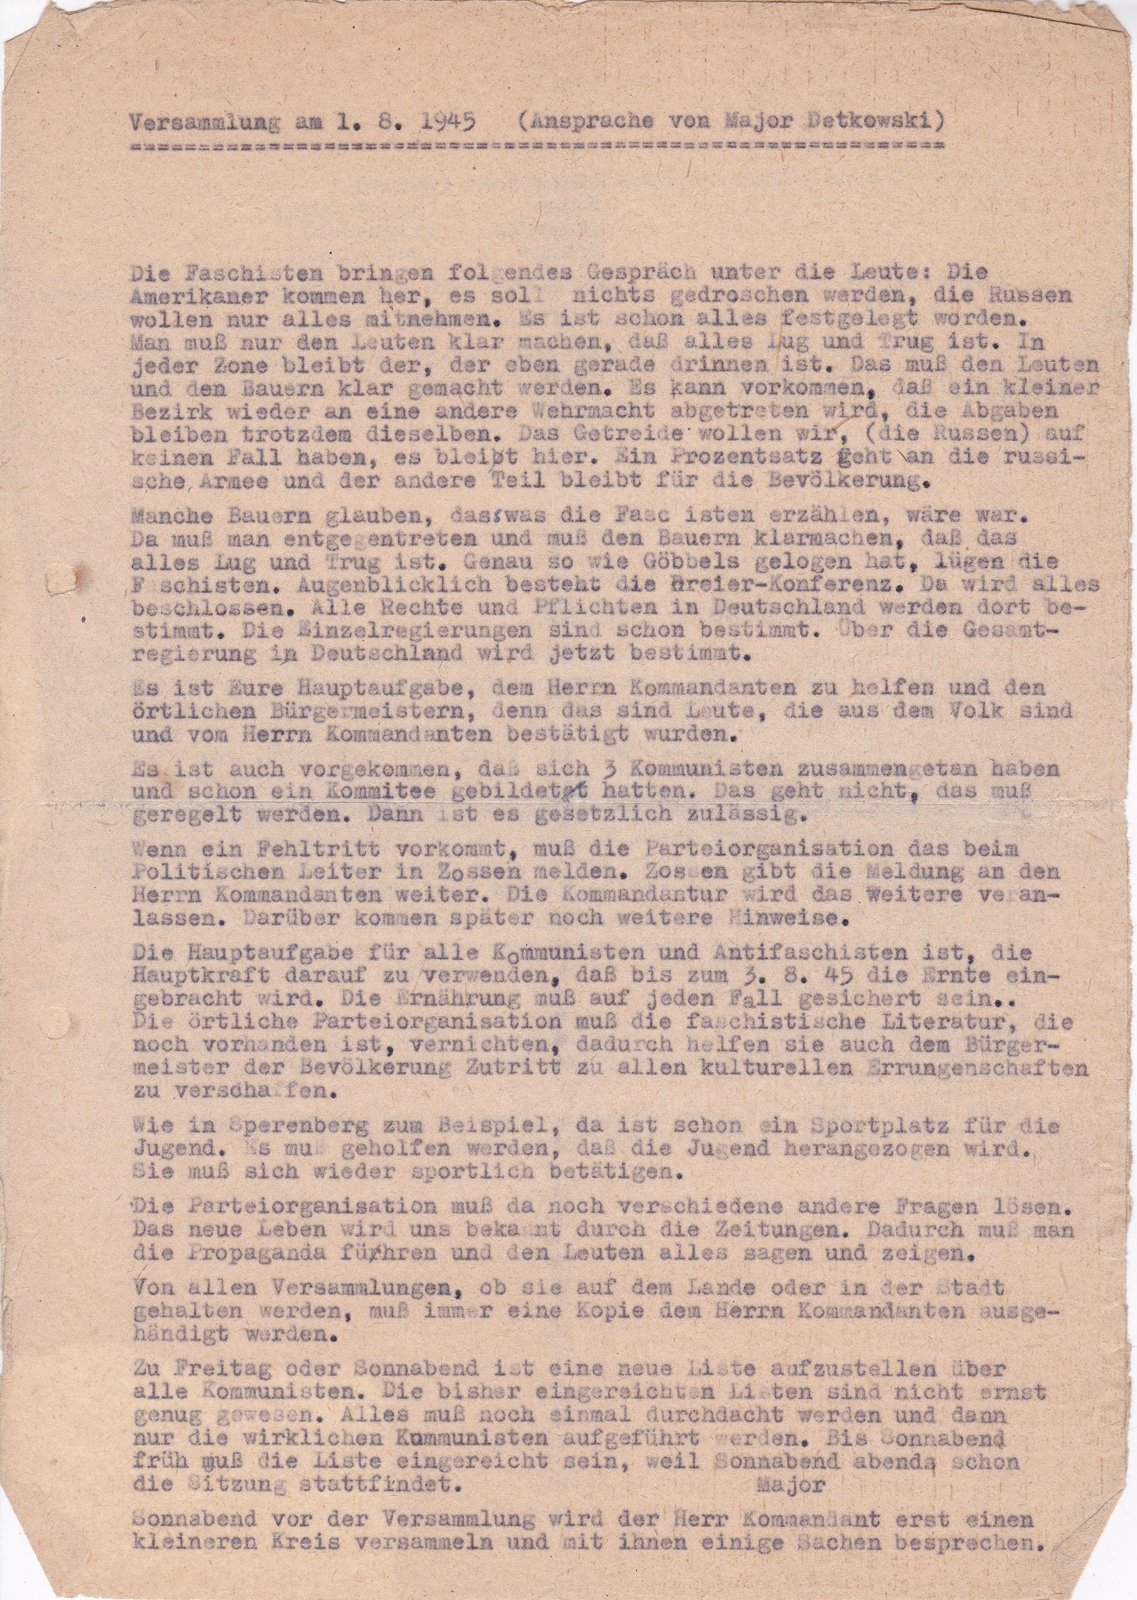 KPD, 01.08.1945 (Heimatverein "Alter Krug" Zossen e.V. CC BY-NC-SA)